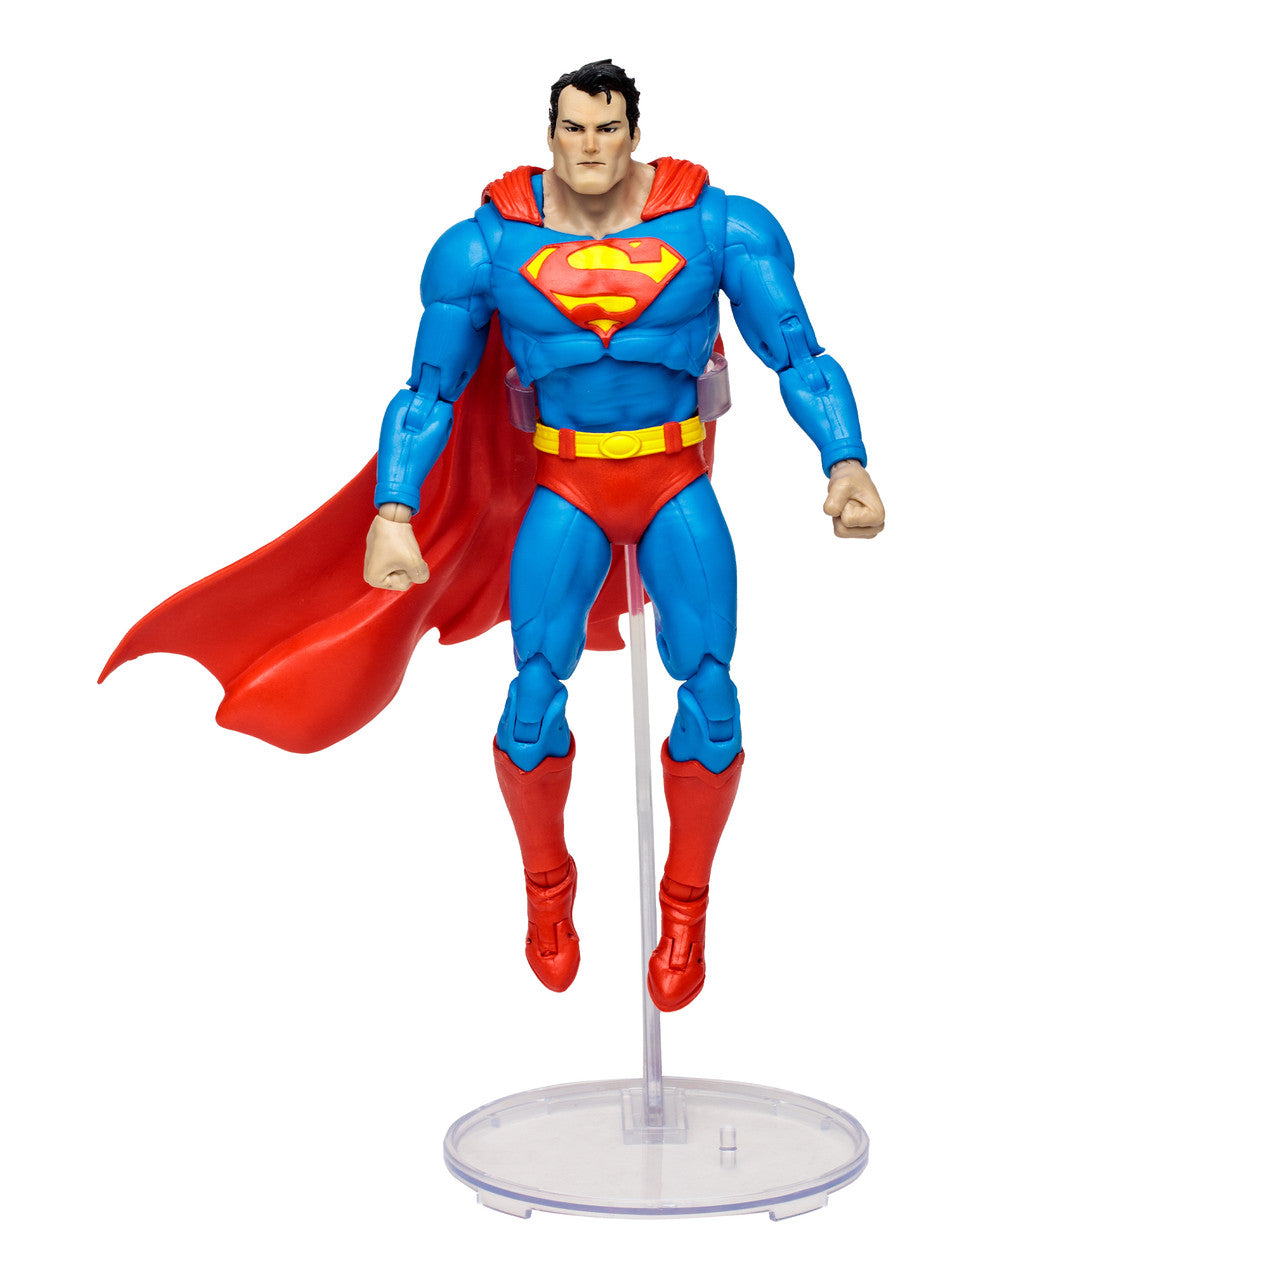 Superman action figure - Heretoserveyou